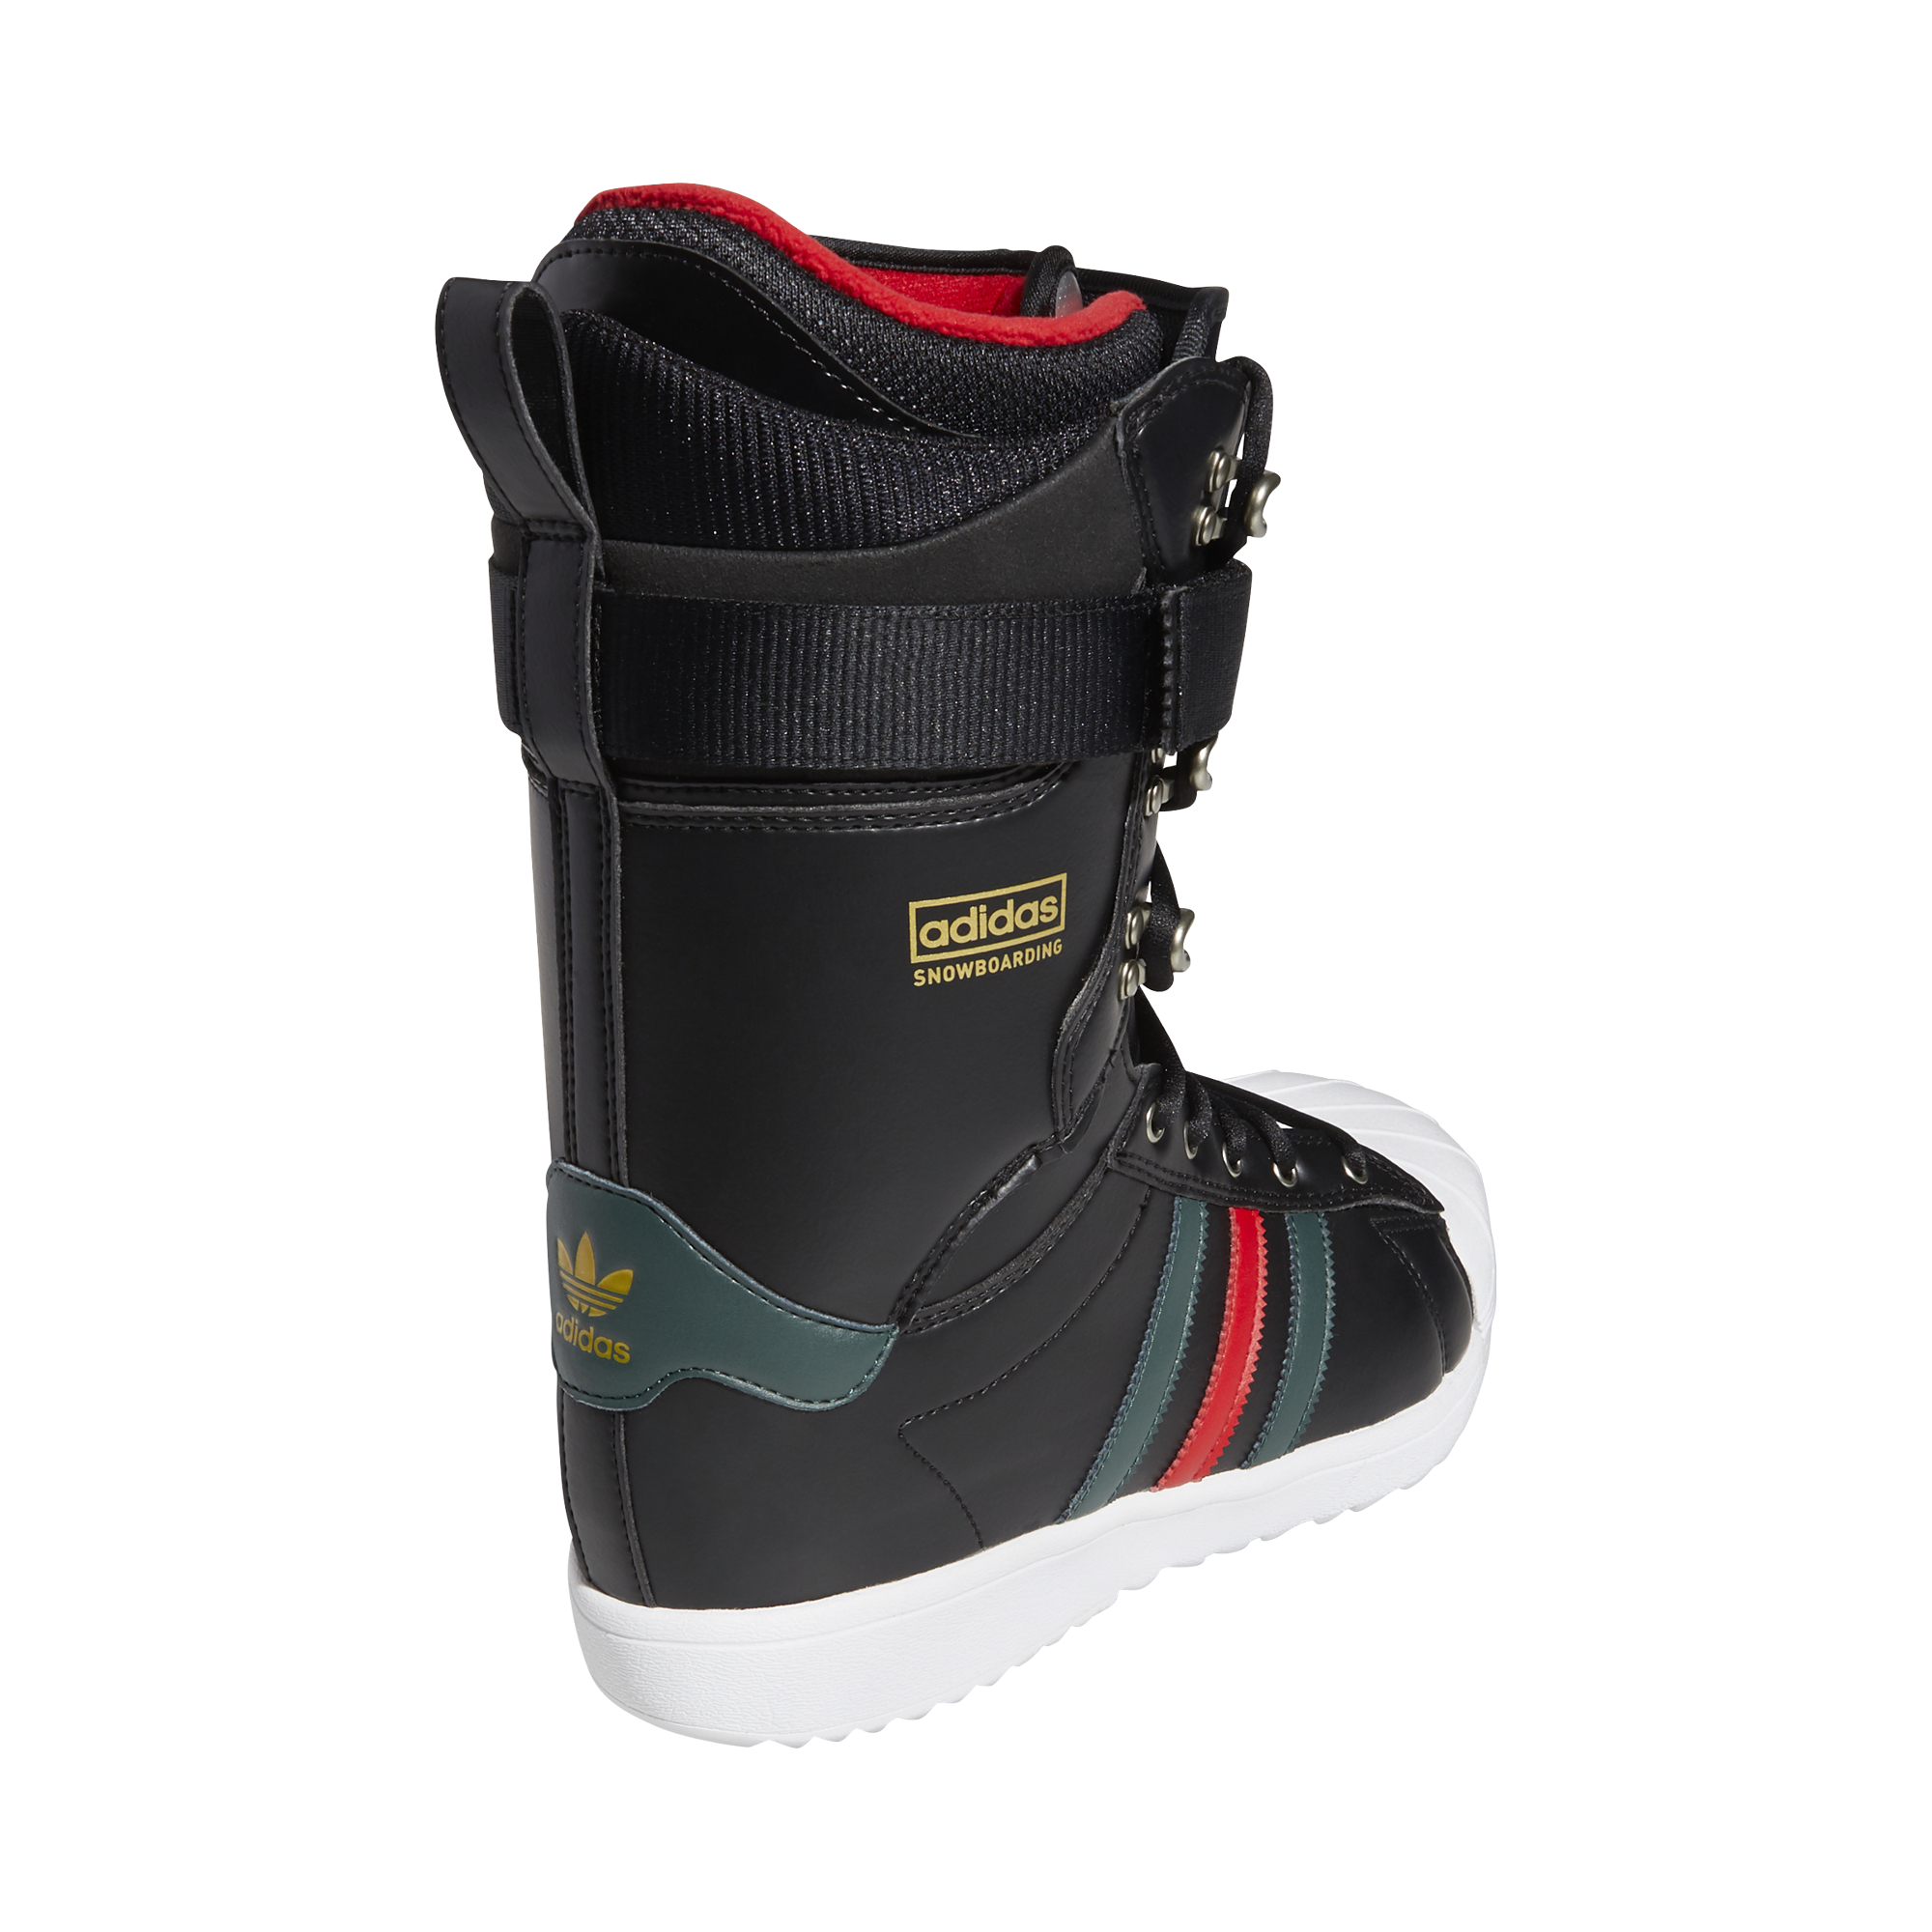 Adidas Superstar ADV Snowboard Boots